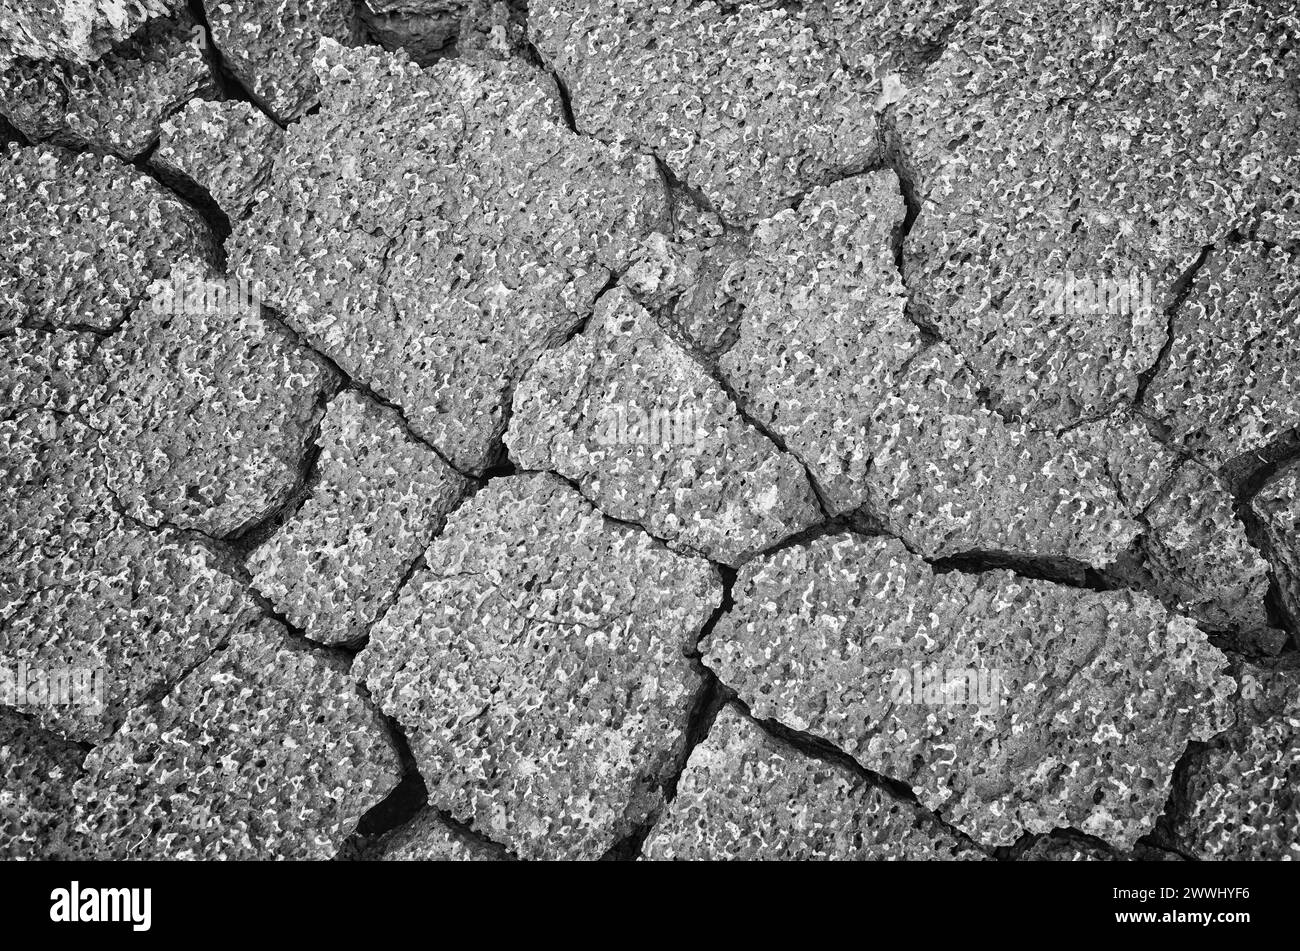 Black and white close up photo of volcanic rocks, nature background, Galapagos Islands, Ecuador. Stock Photo